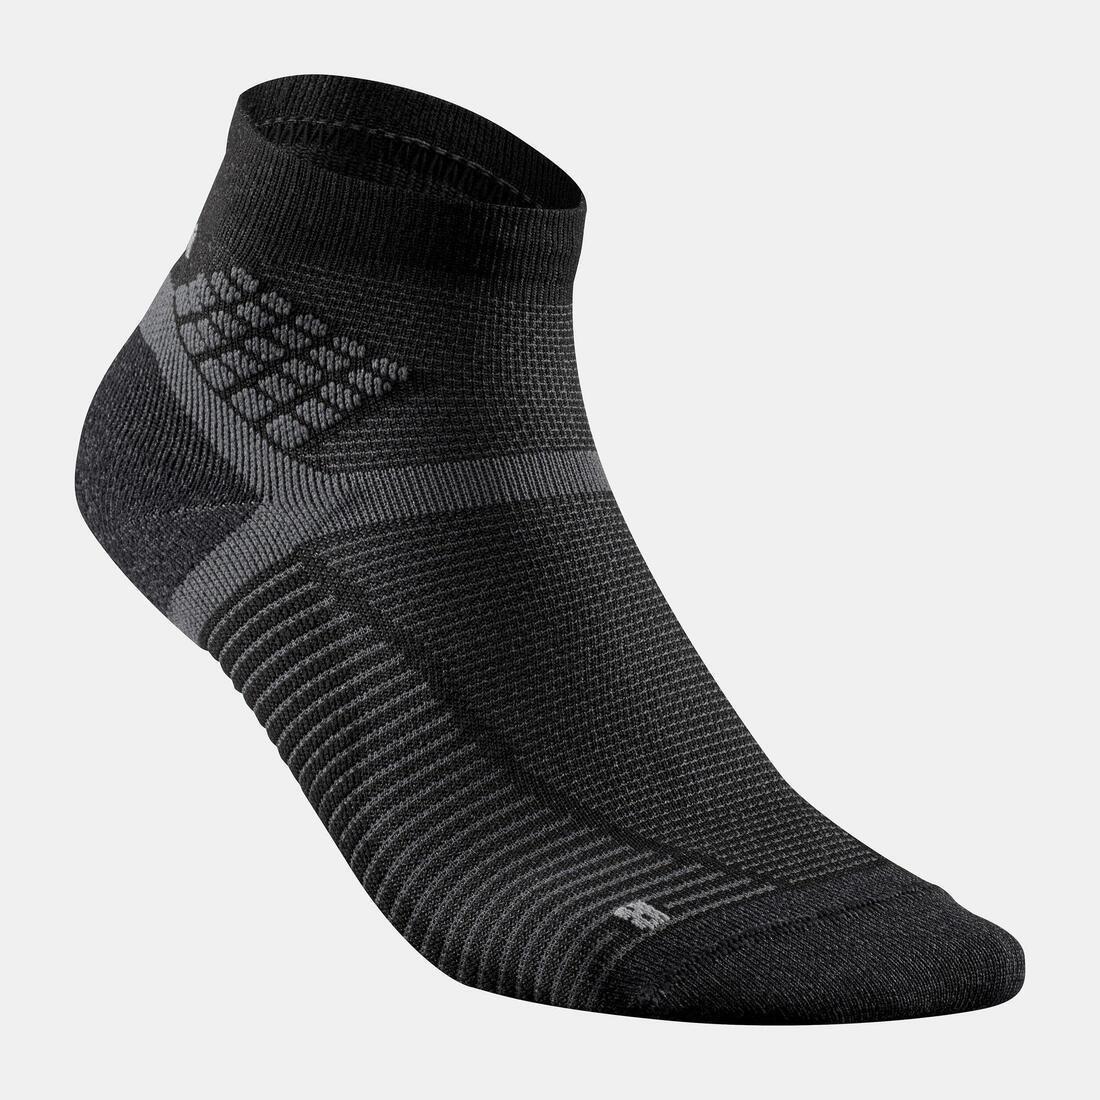 QUECHUA - Unisex Hiking Socks - Mh500 Mid X2 Pairs, Black